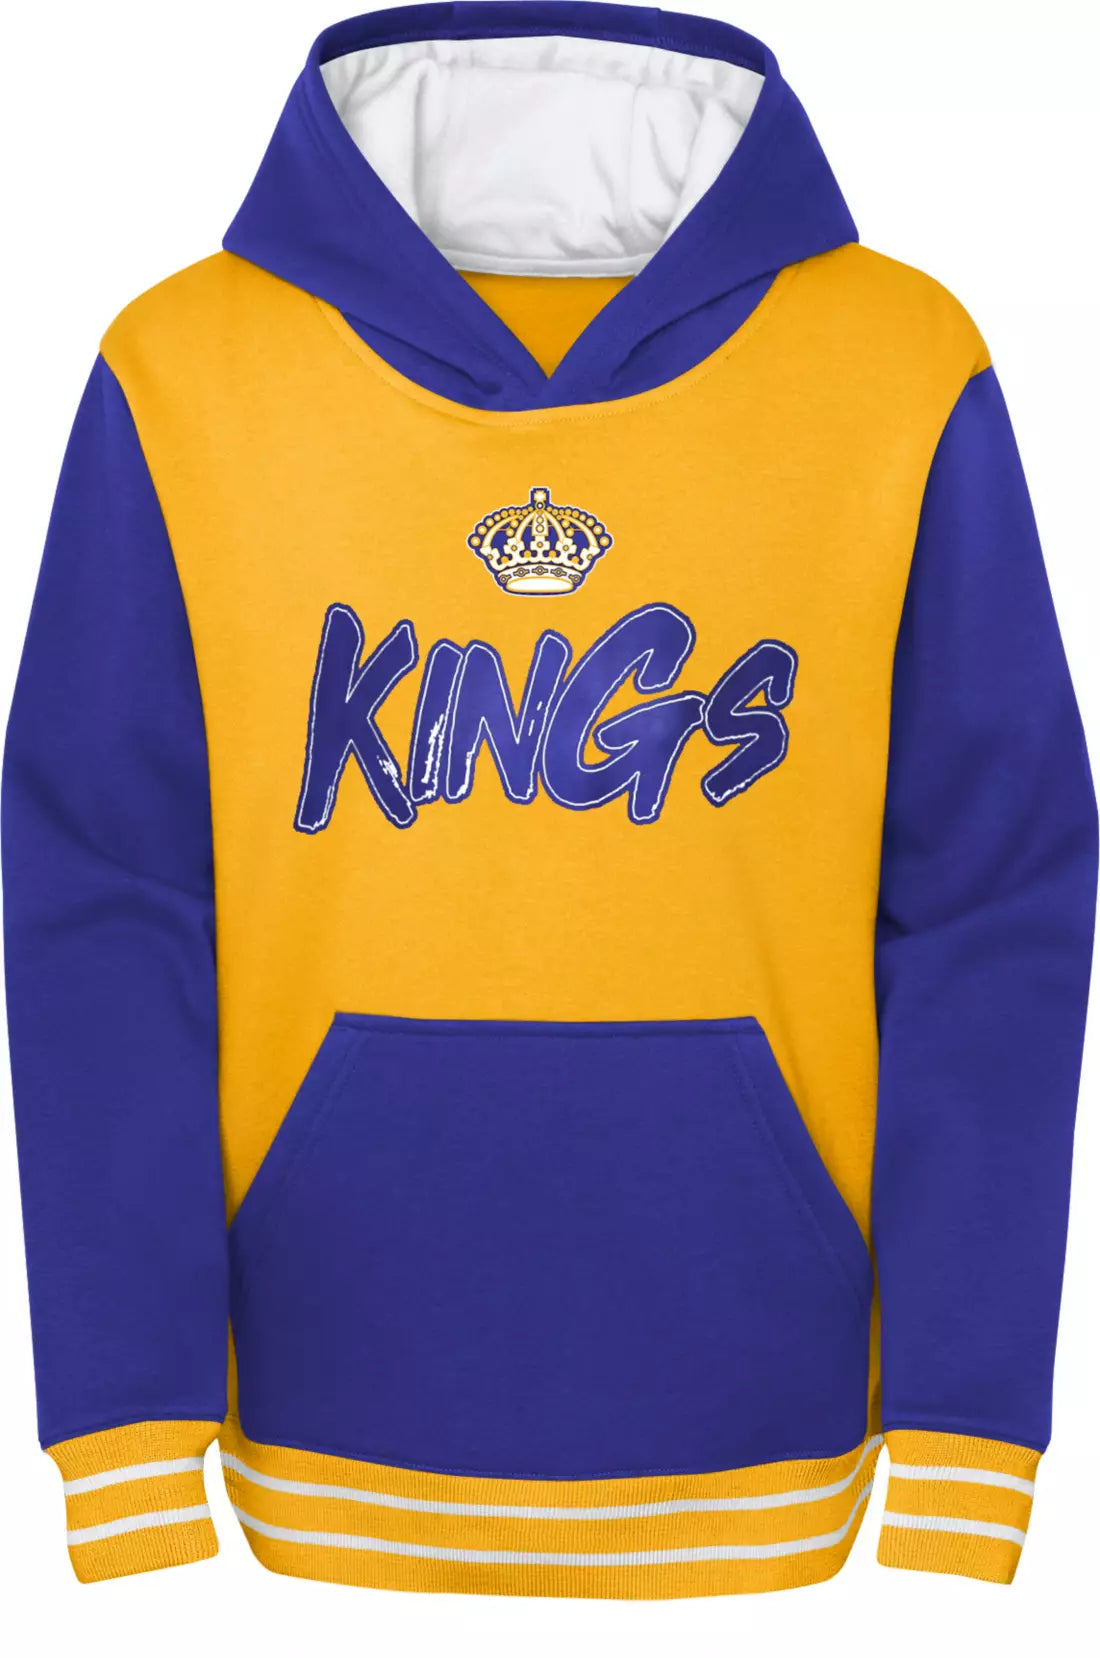 la kings jersey retro